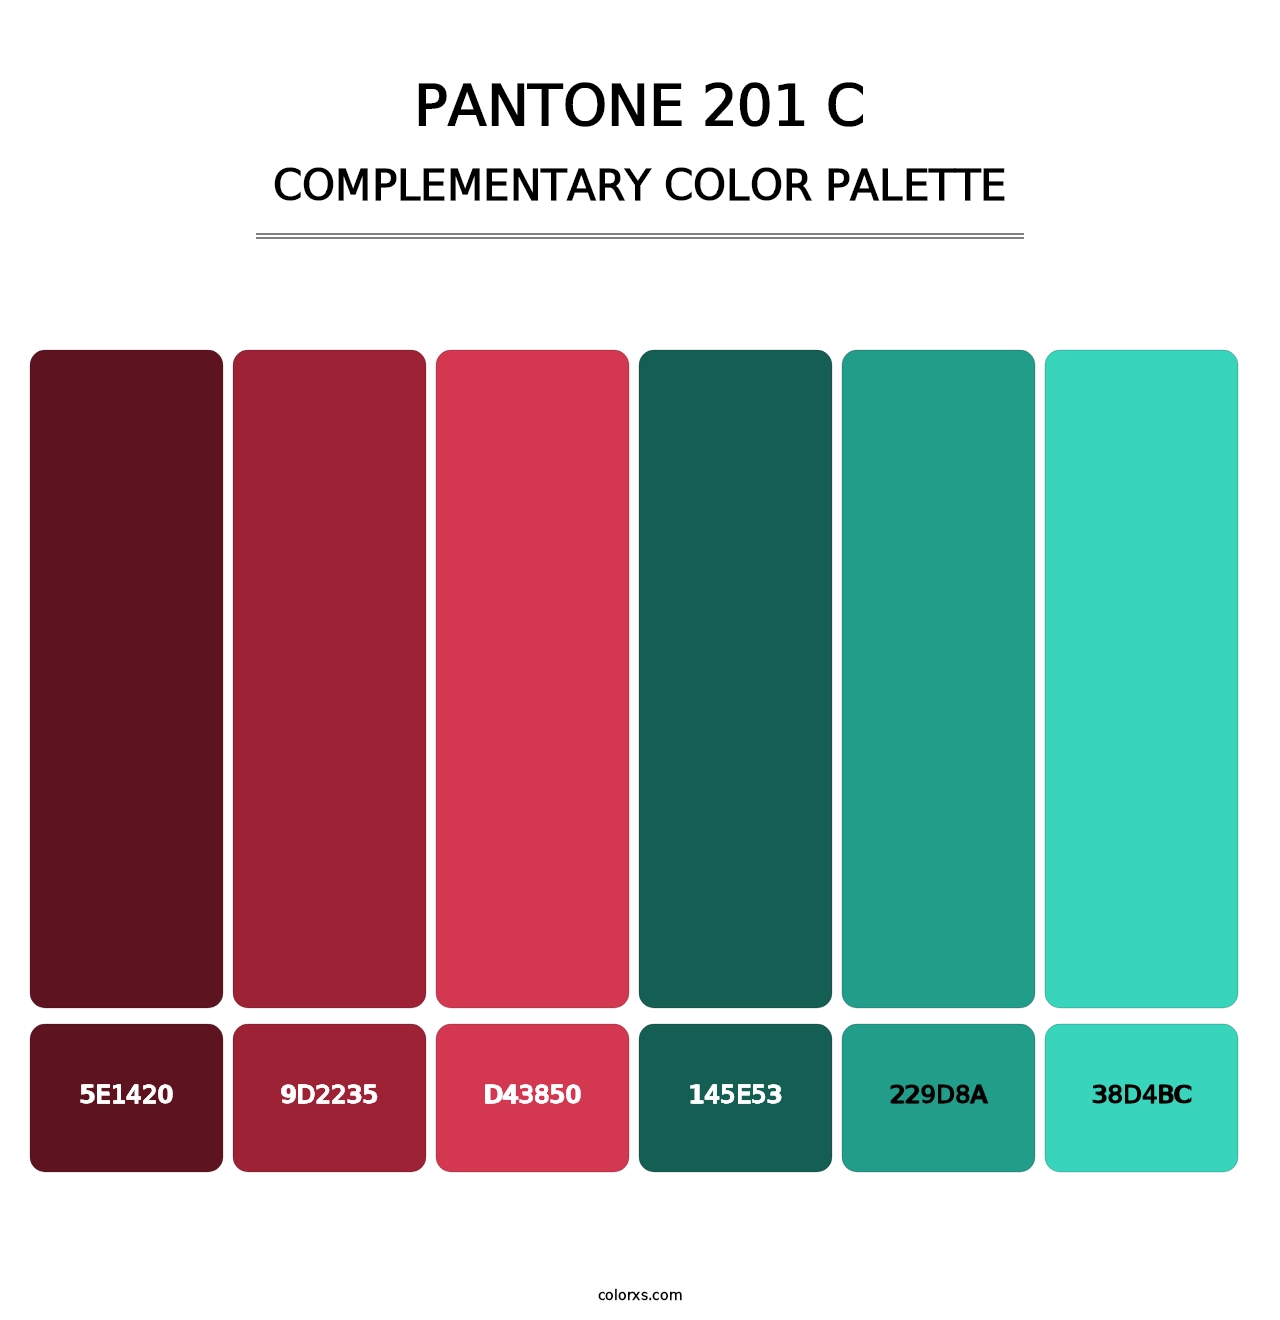 PANTONE 201 C - Complementary Color Palette